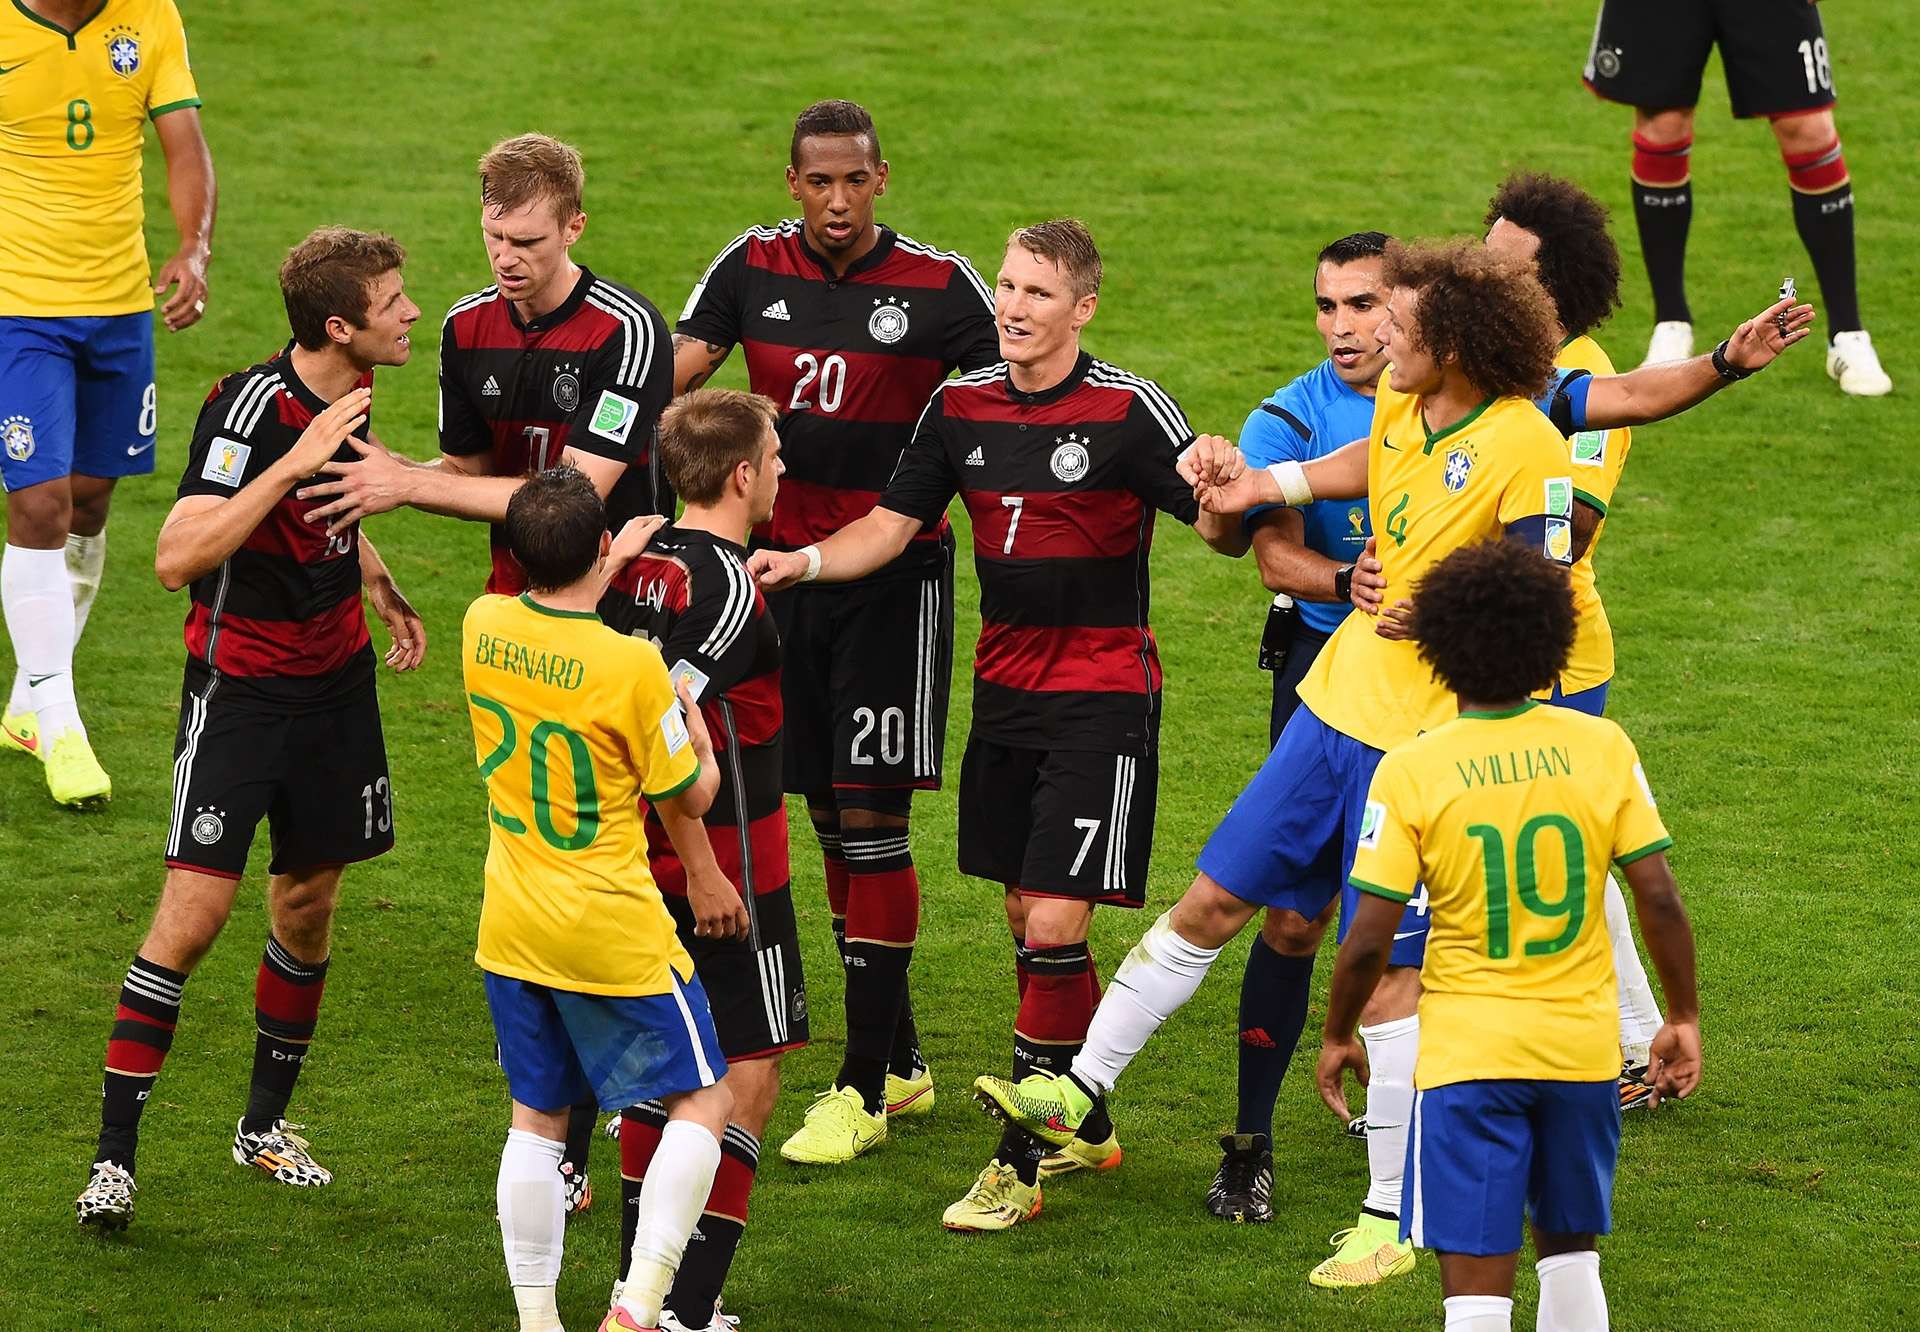 David Luiz Thomas Muller discussion Brazil Germany 2014 World Cup quarter-final 07082014